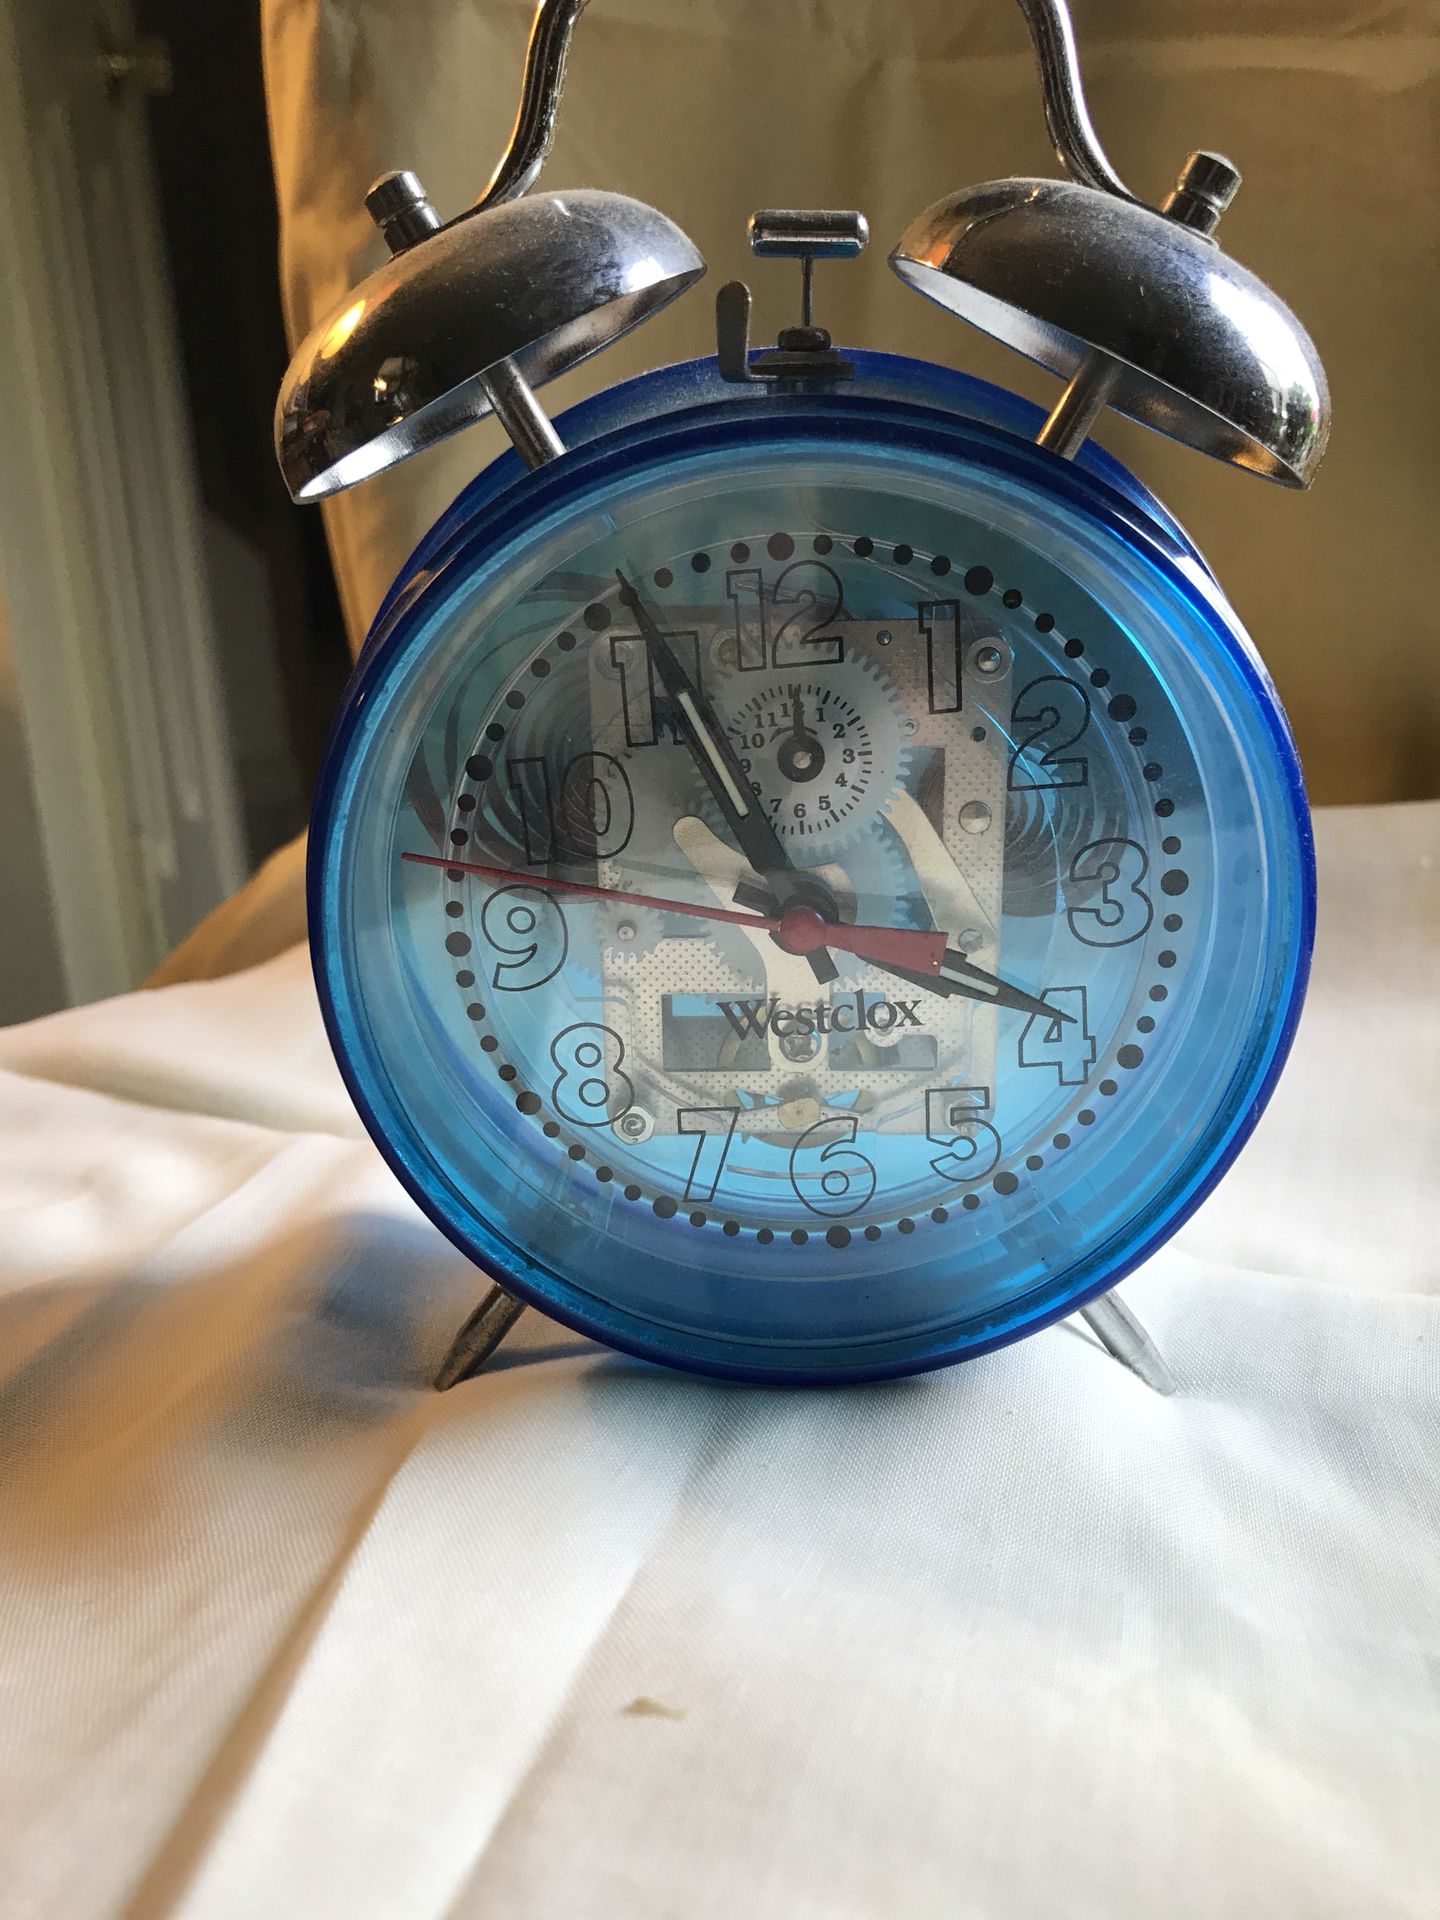 Westclox wind-up alarm clock